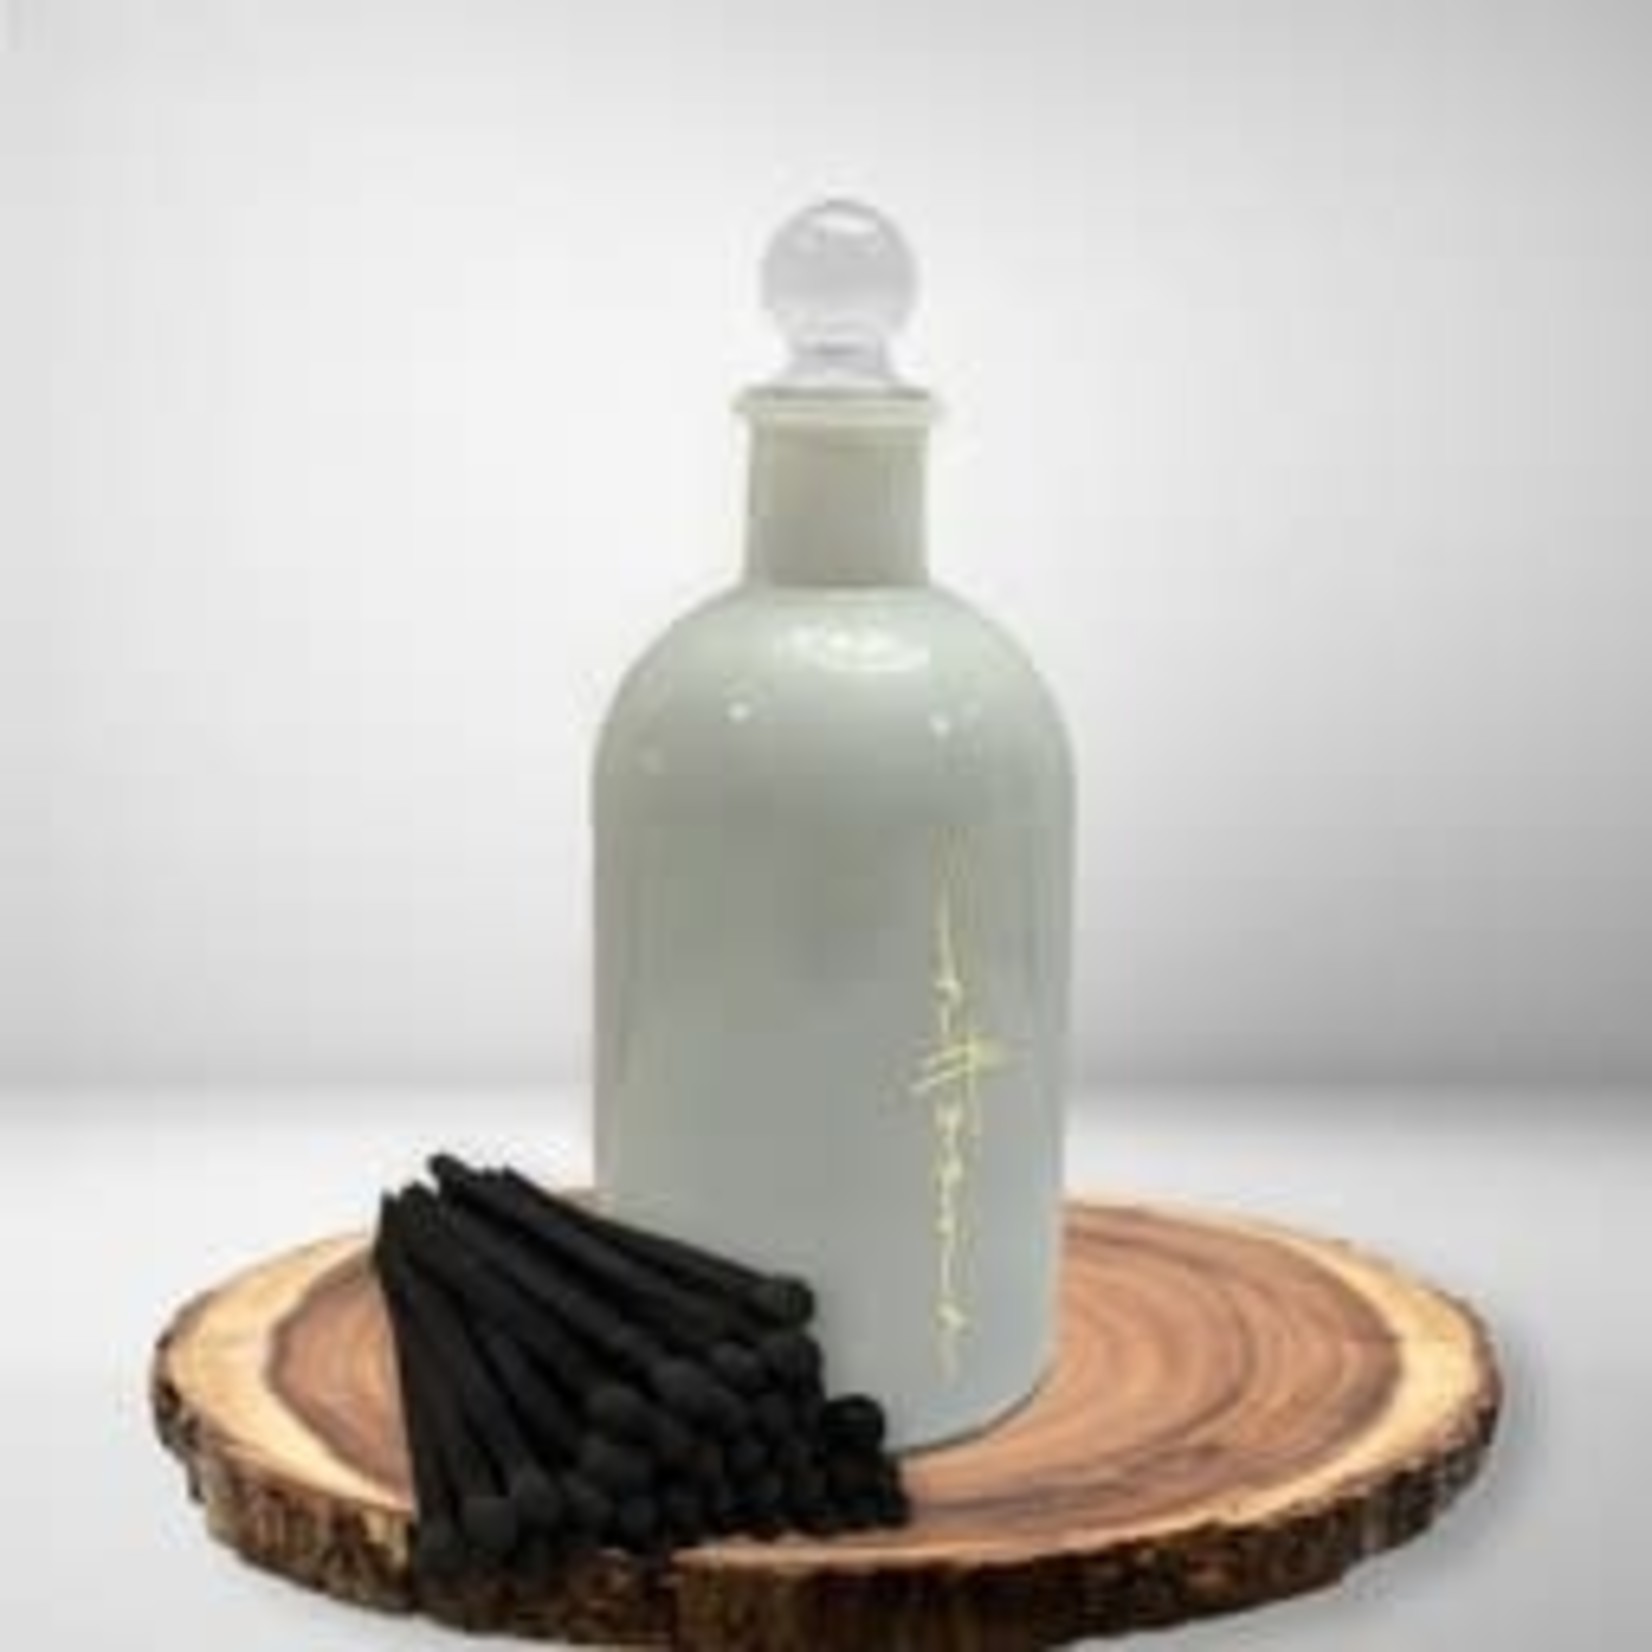 TWS Altoona Matches in Glass Bottle - White